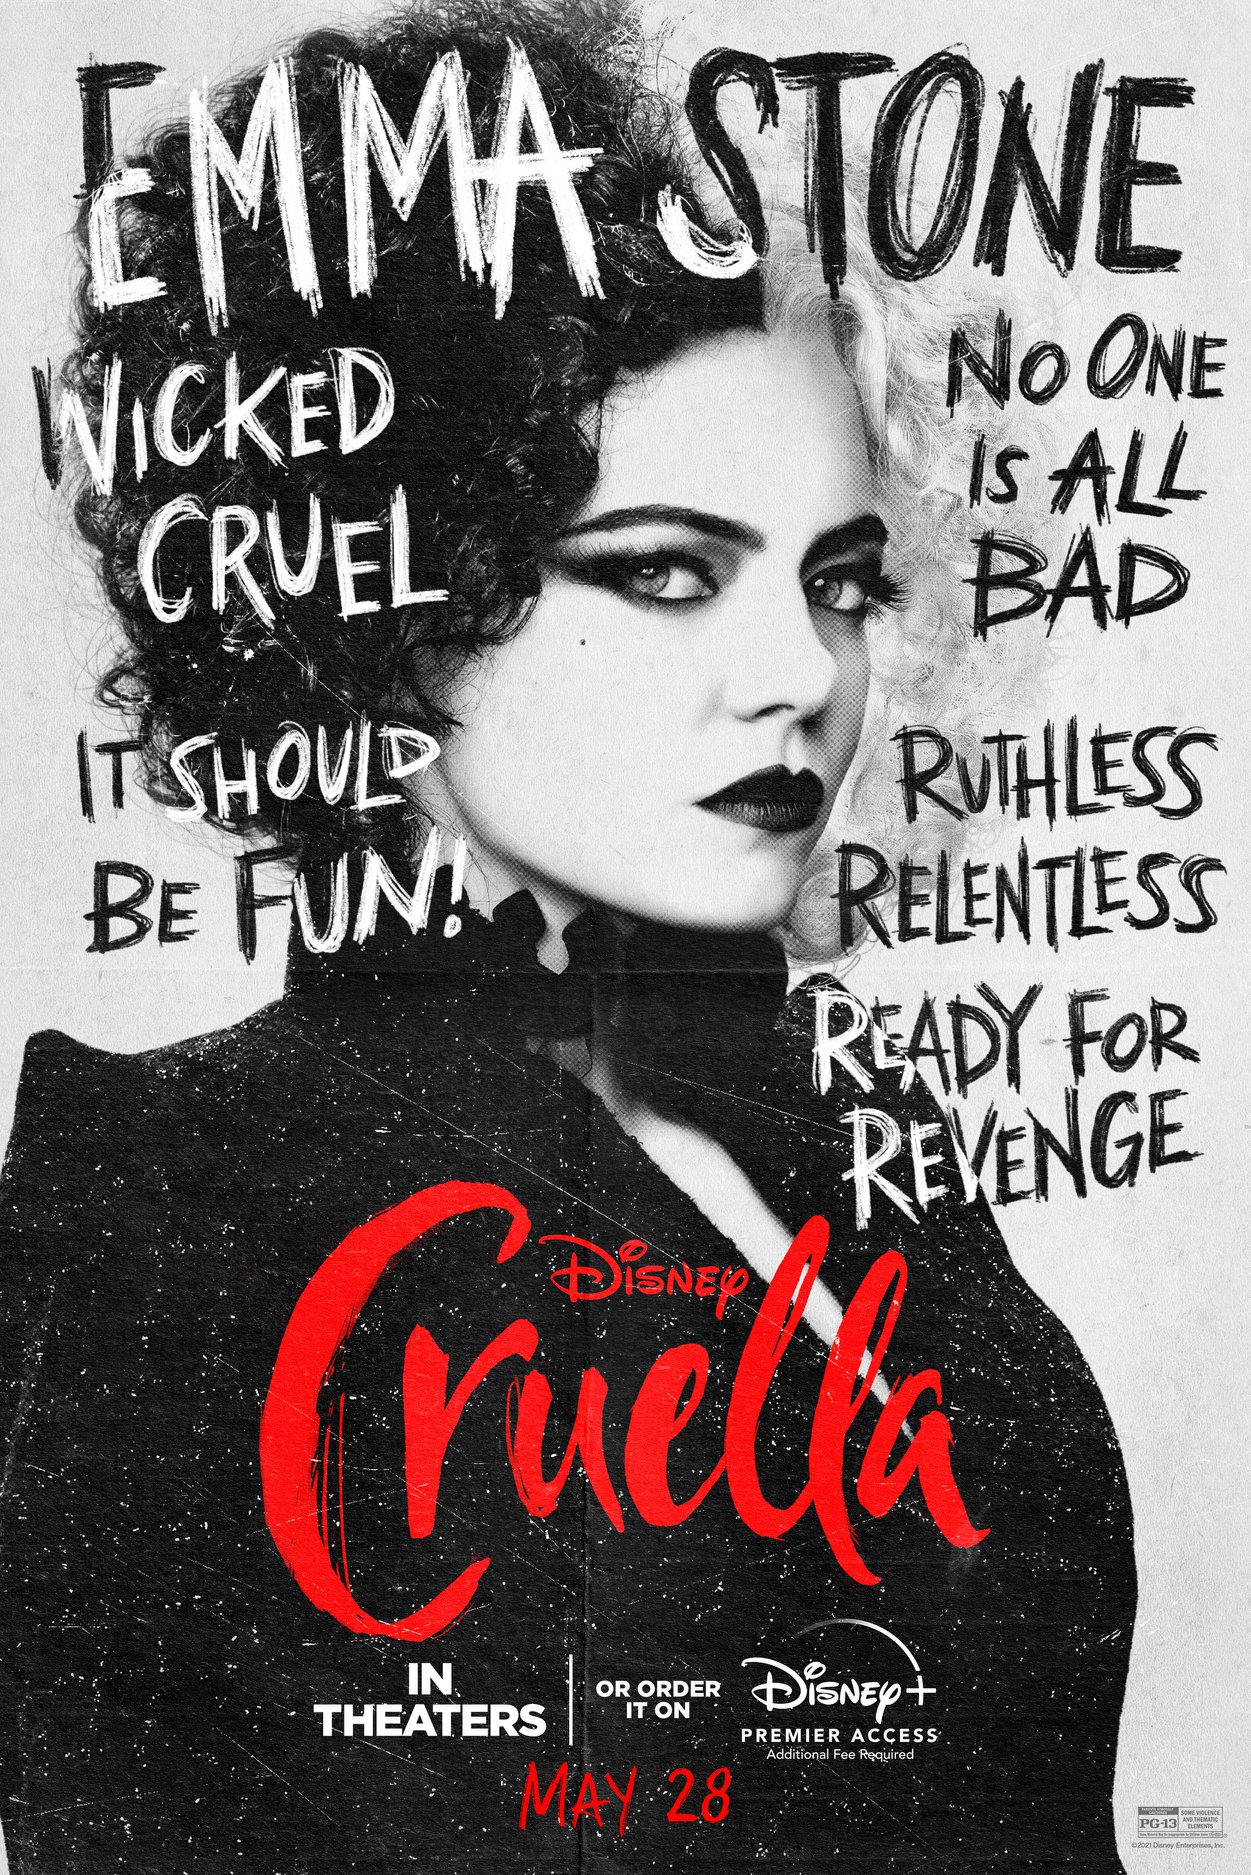 Do We Really Need a Young Version of Cruella De Vil?